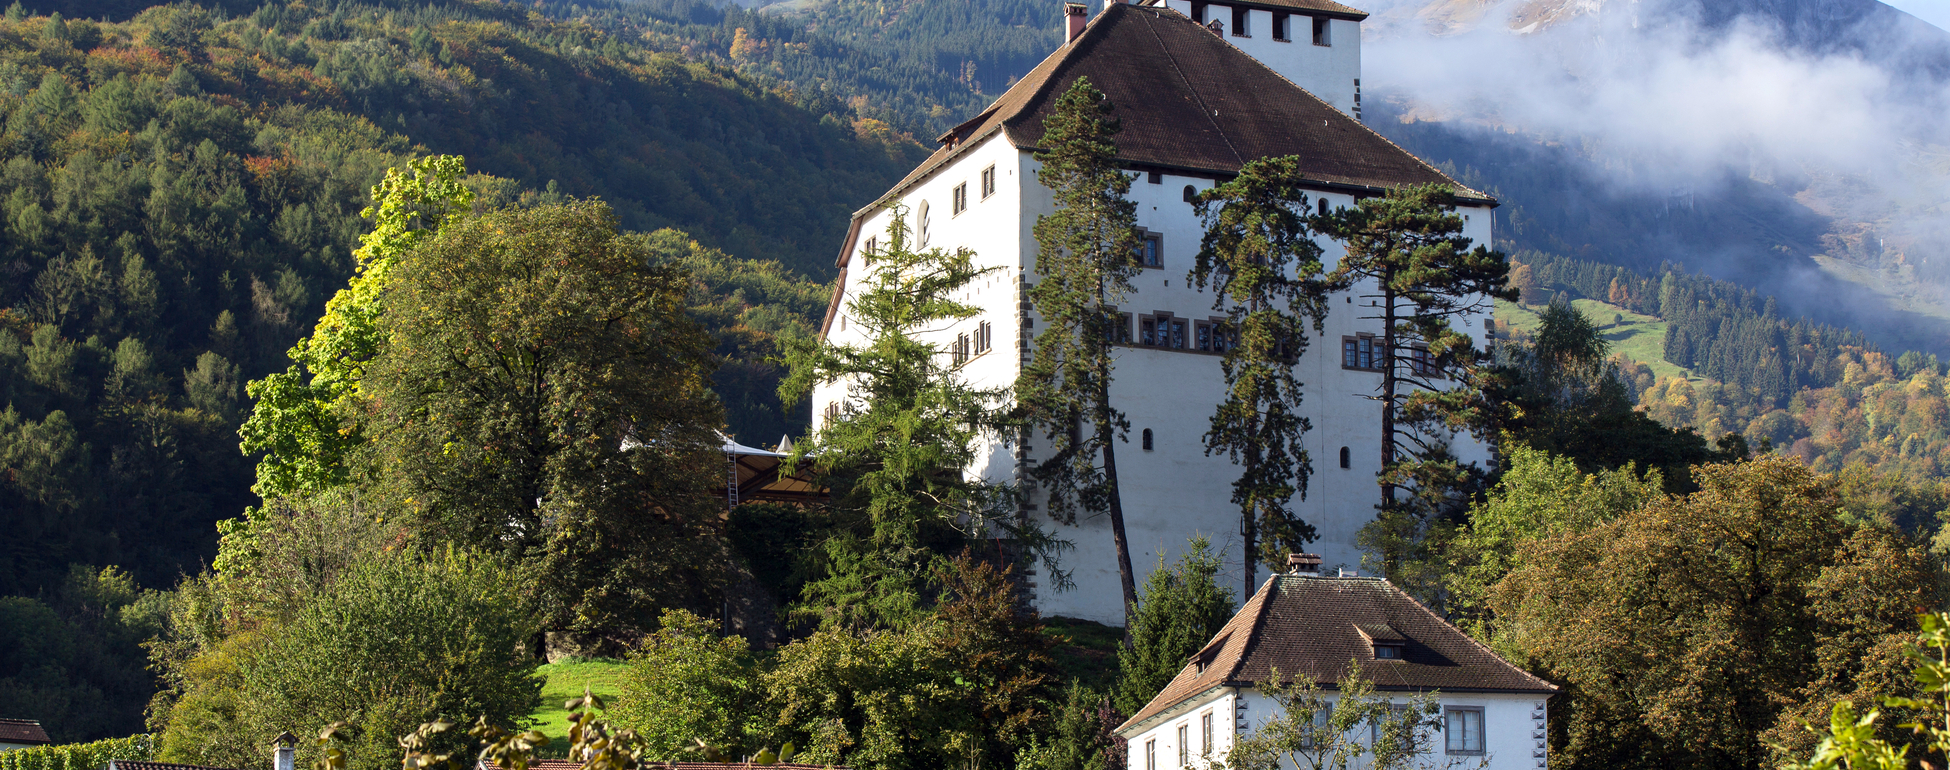 Castello di Werdenberg